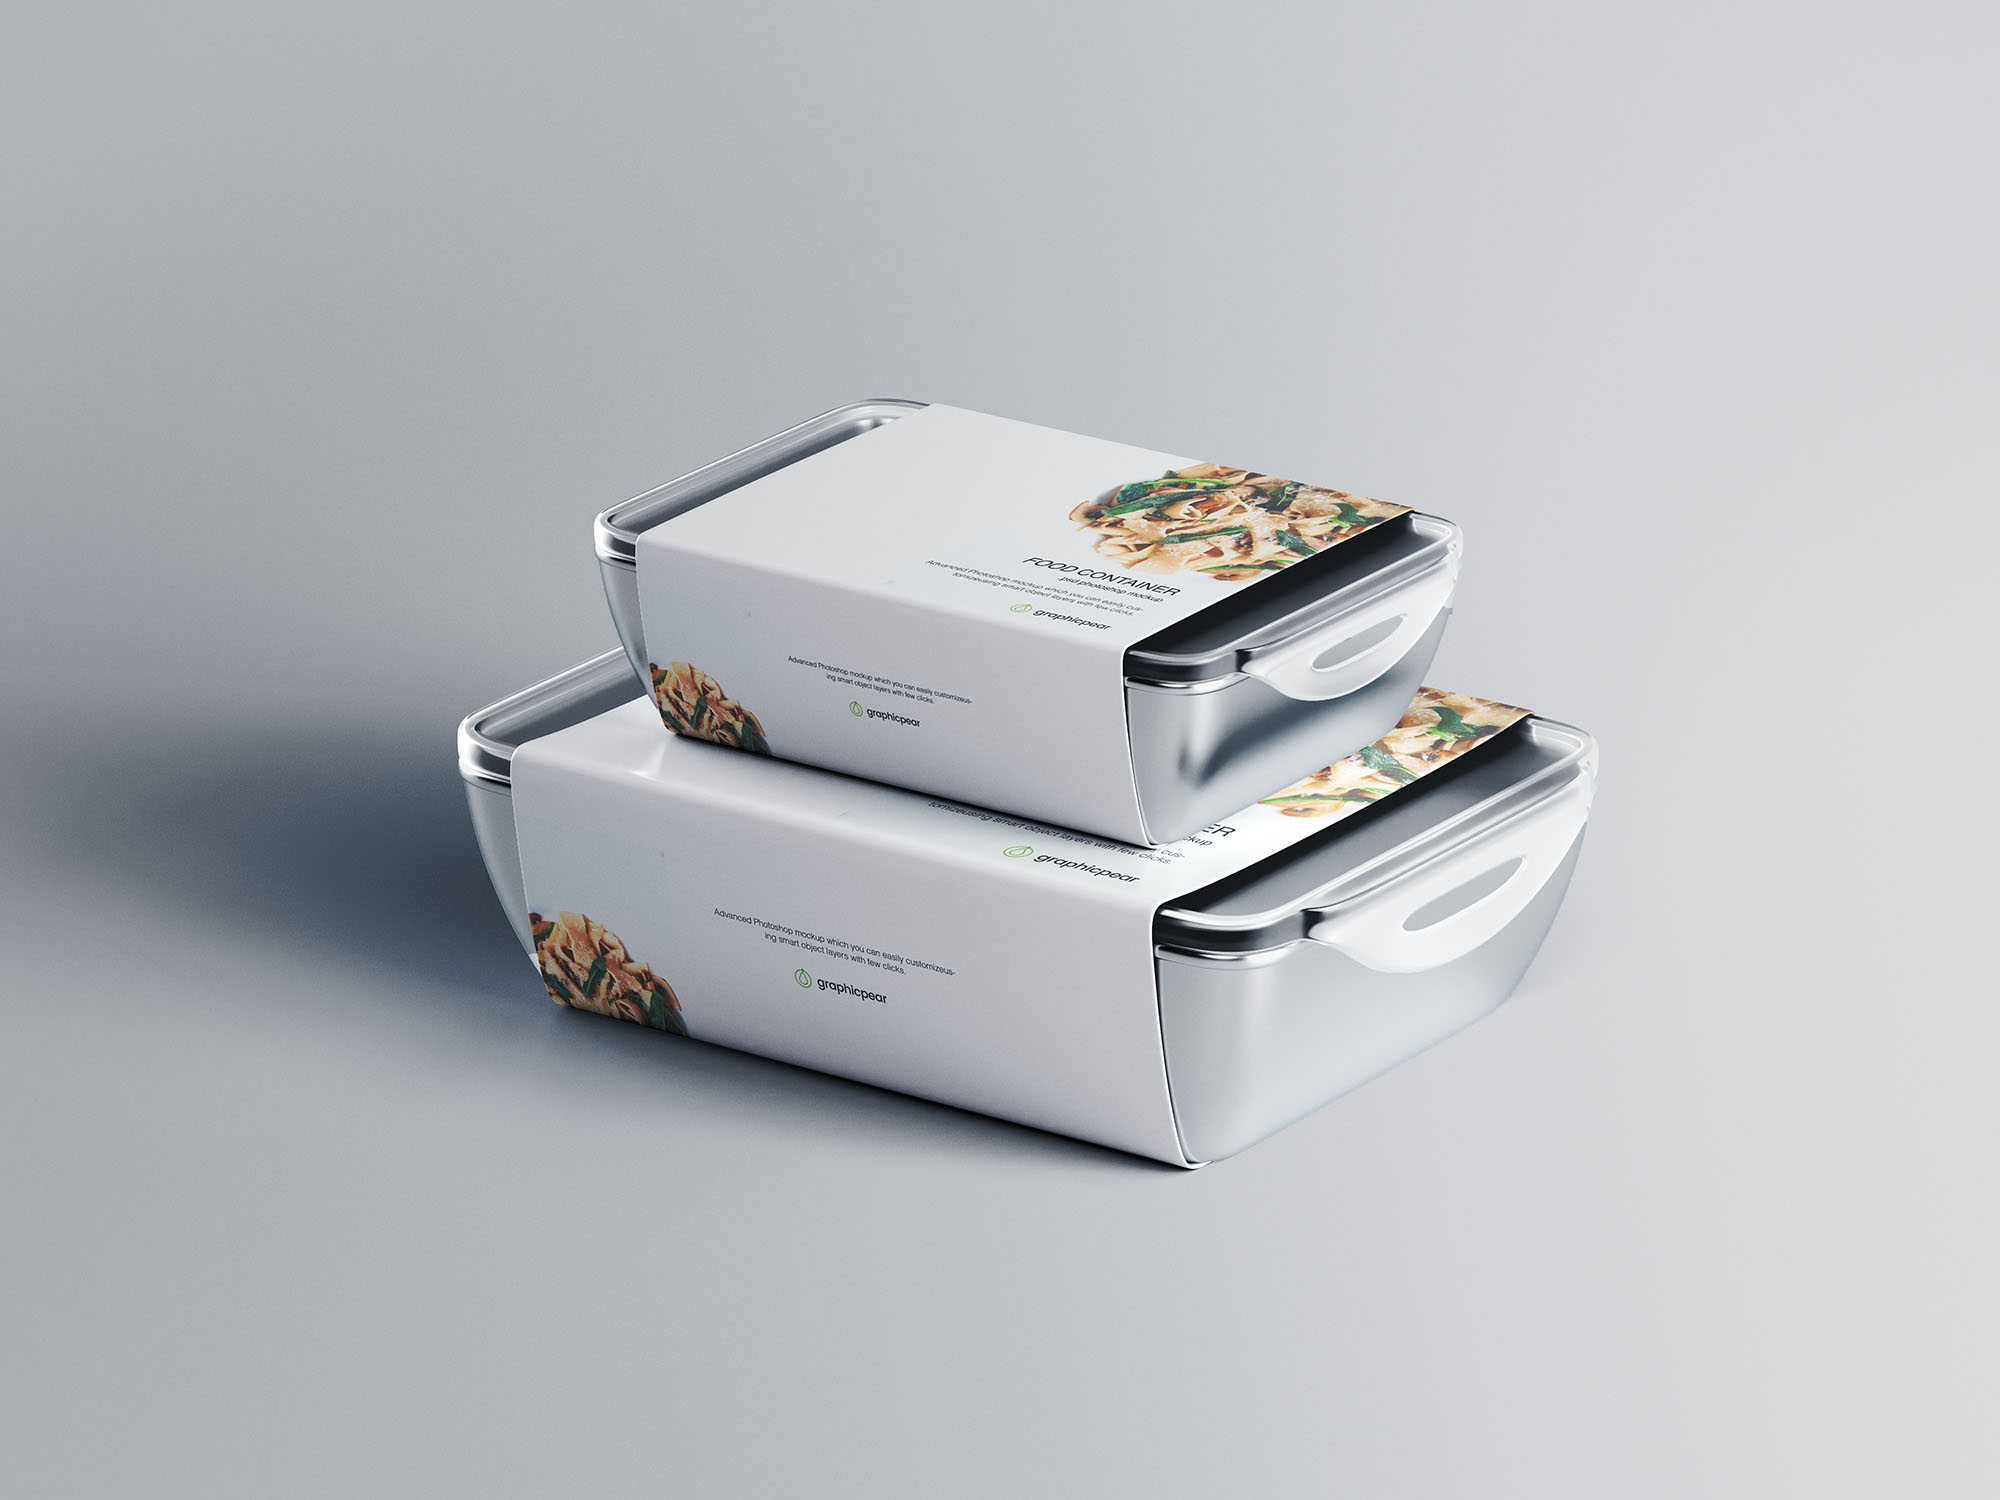 带标签快餐包装盒设计效果图样机模板 Food Container Mockup with Label设计素材模板